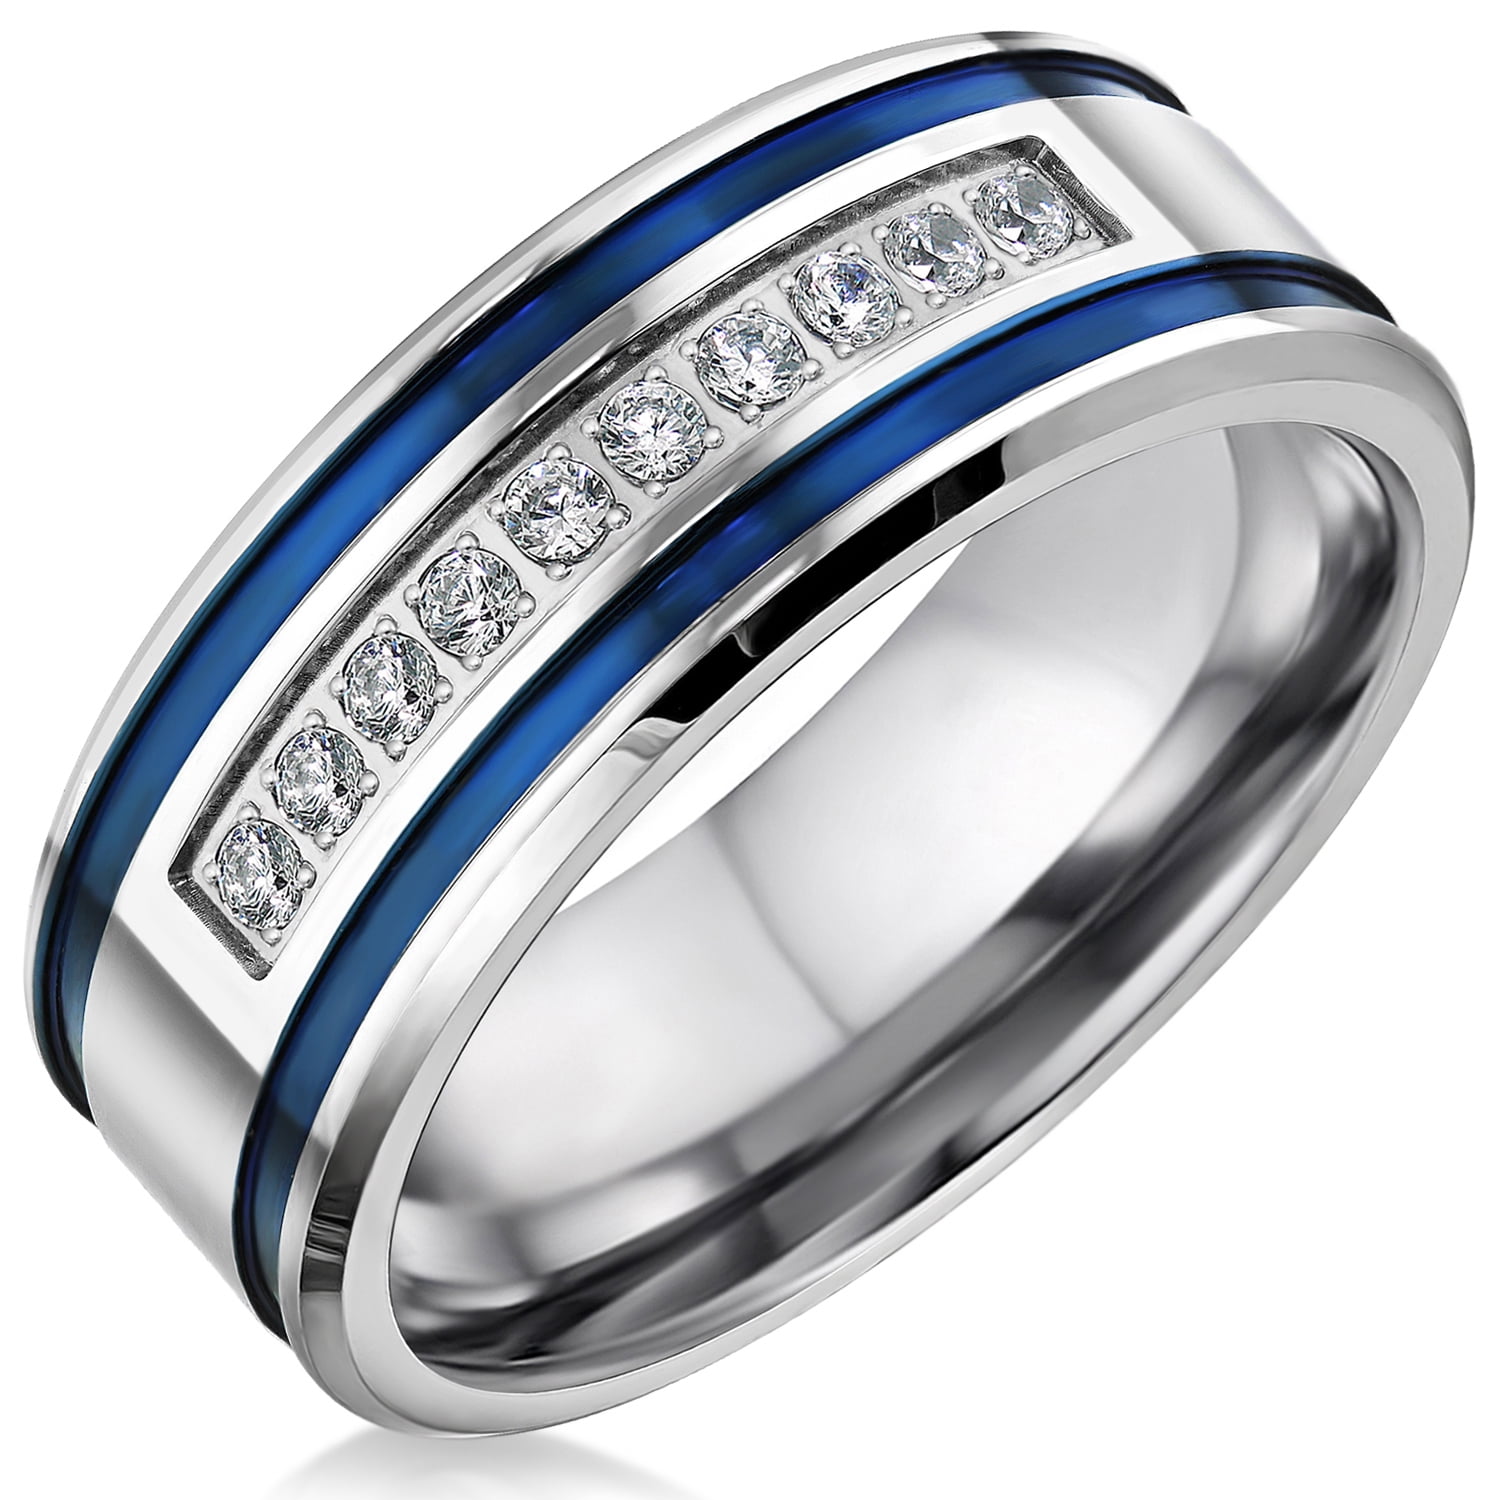 Titanium Ring Diamond Simulated Men's Wedding Band Infinity Jewelry Size 6-13 